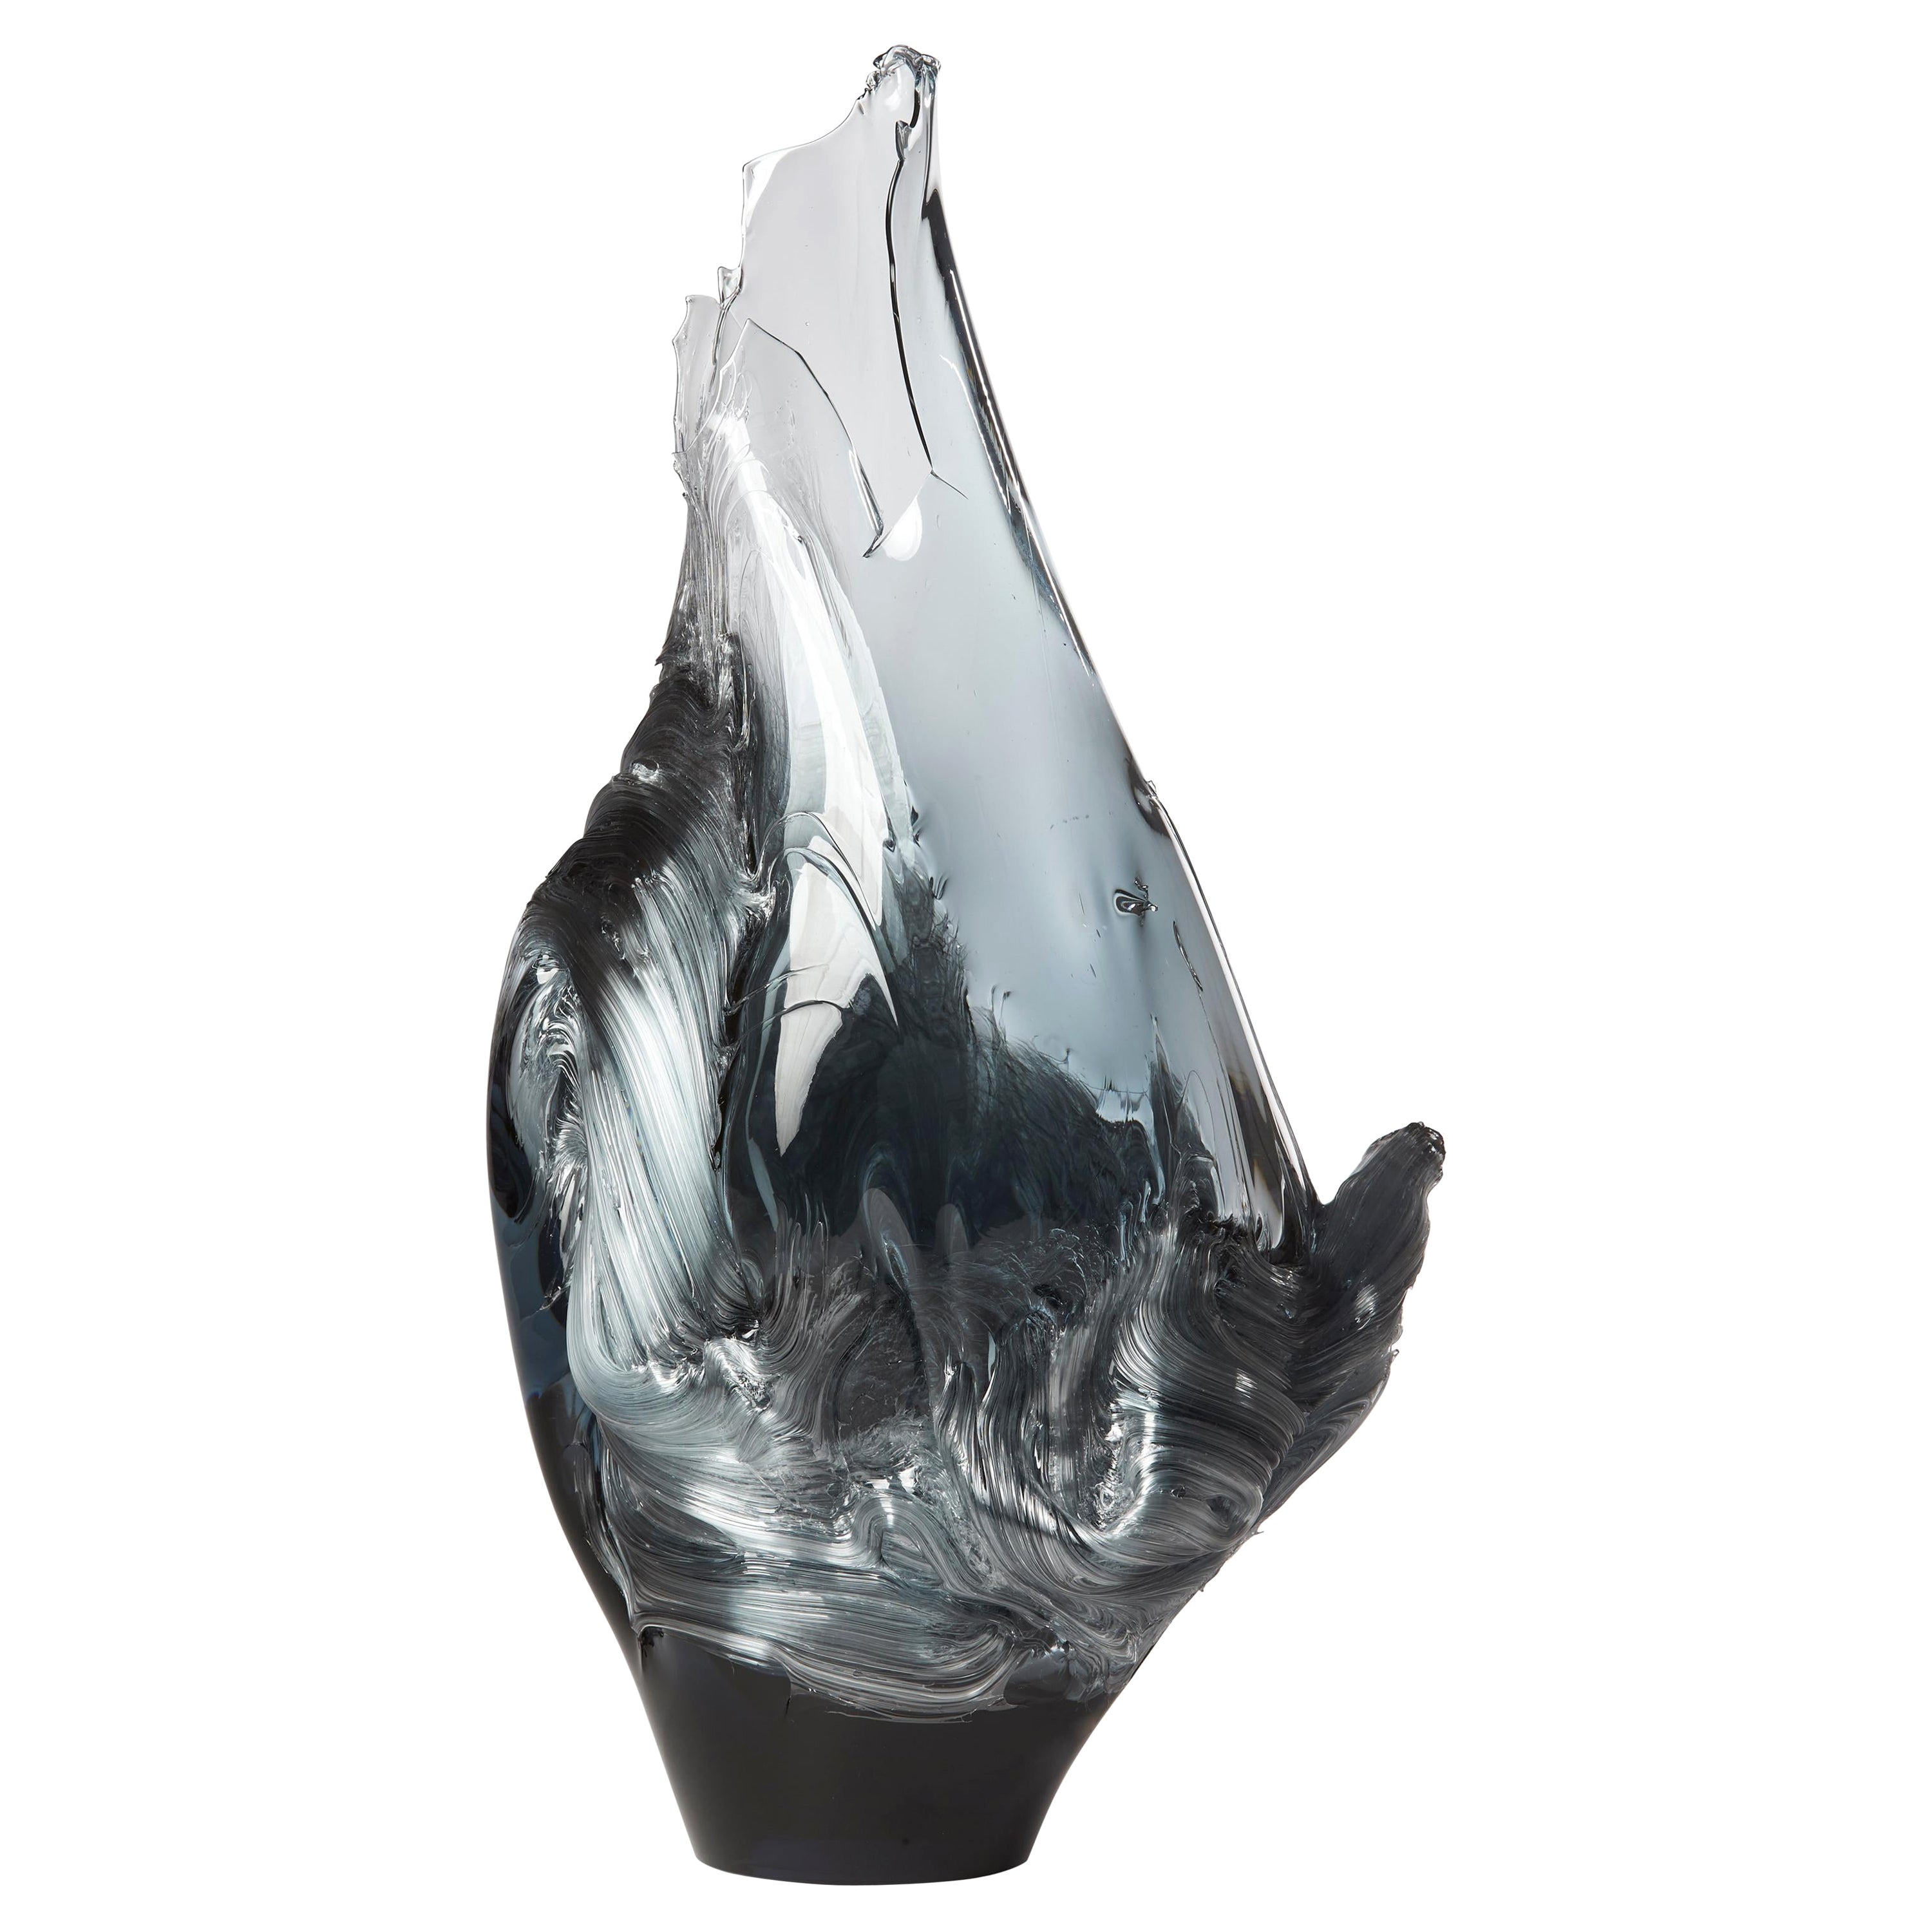 Extraordinaire vase en verre de l'artiste japonais contemporain Shohei Yokoyama